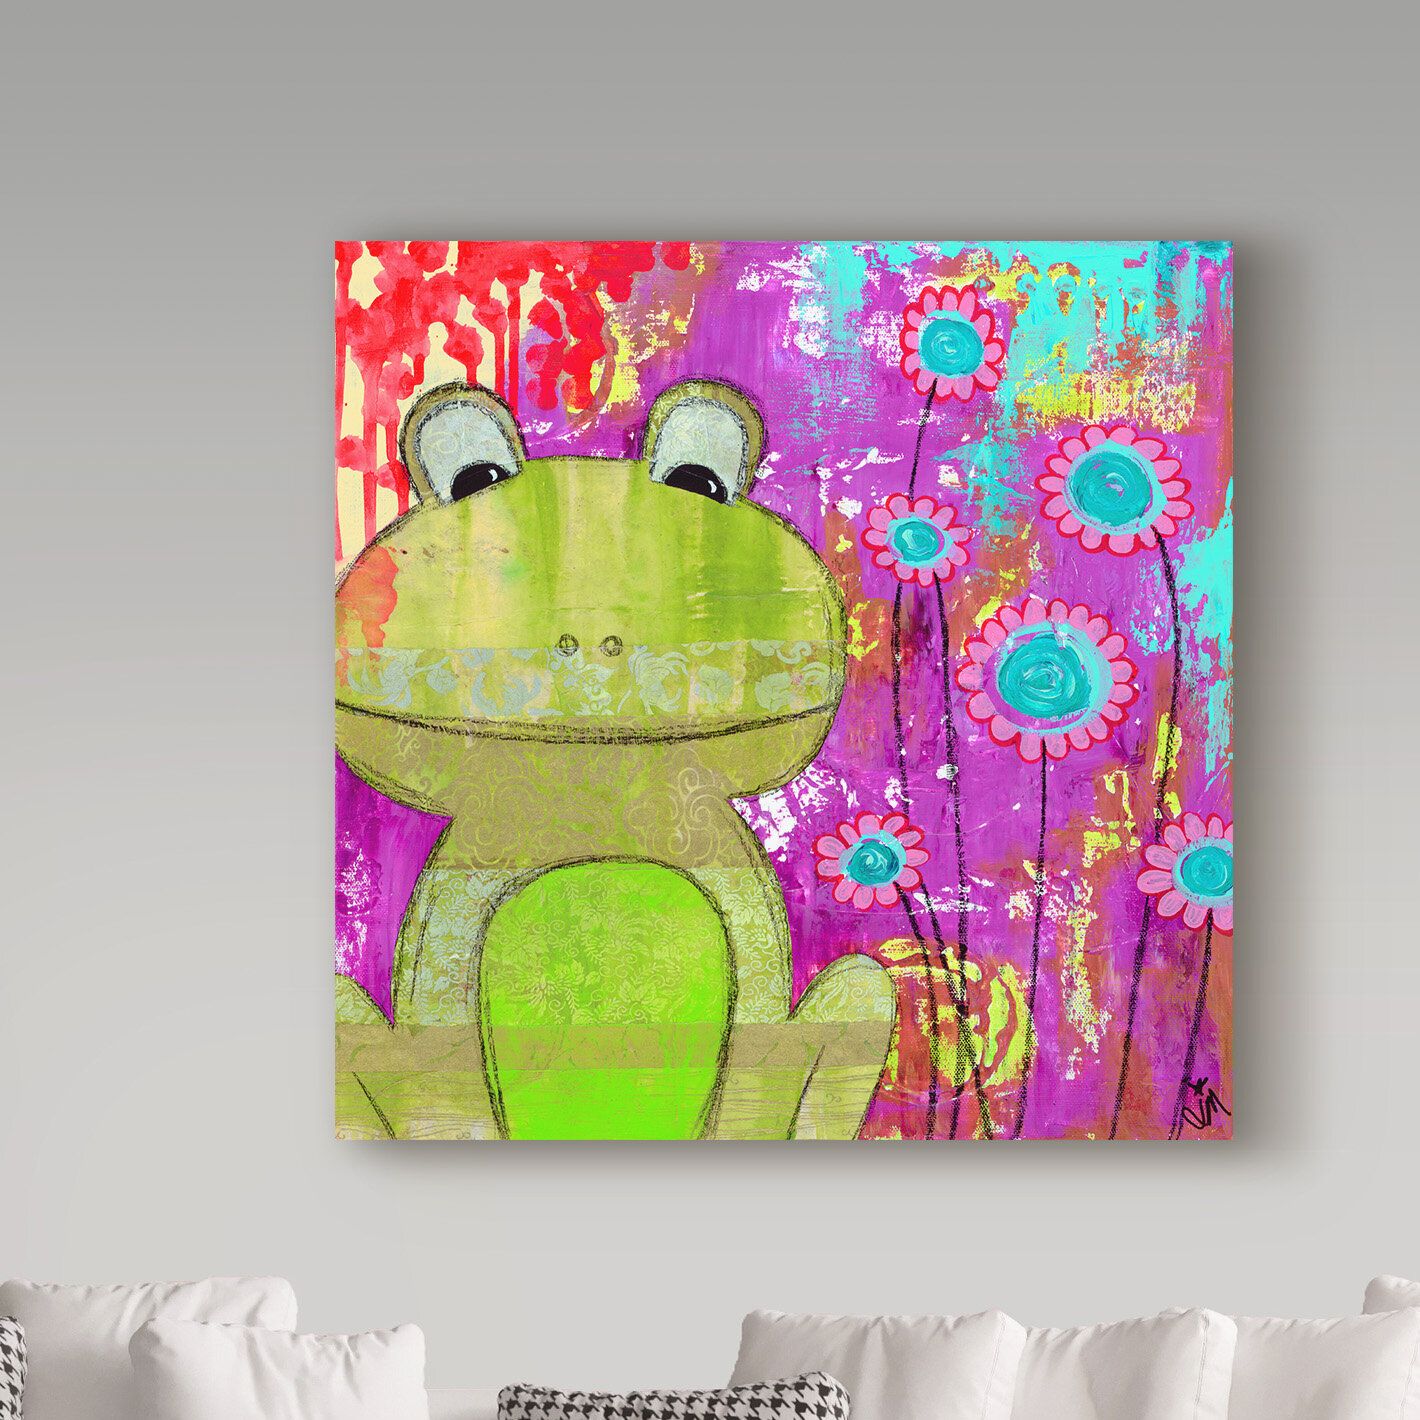 Trademark Art 'whimsical Frog' Canvas Art | Wayfair Regarding Most Current Frog Wall Art (View 17 of 20)